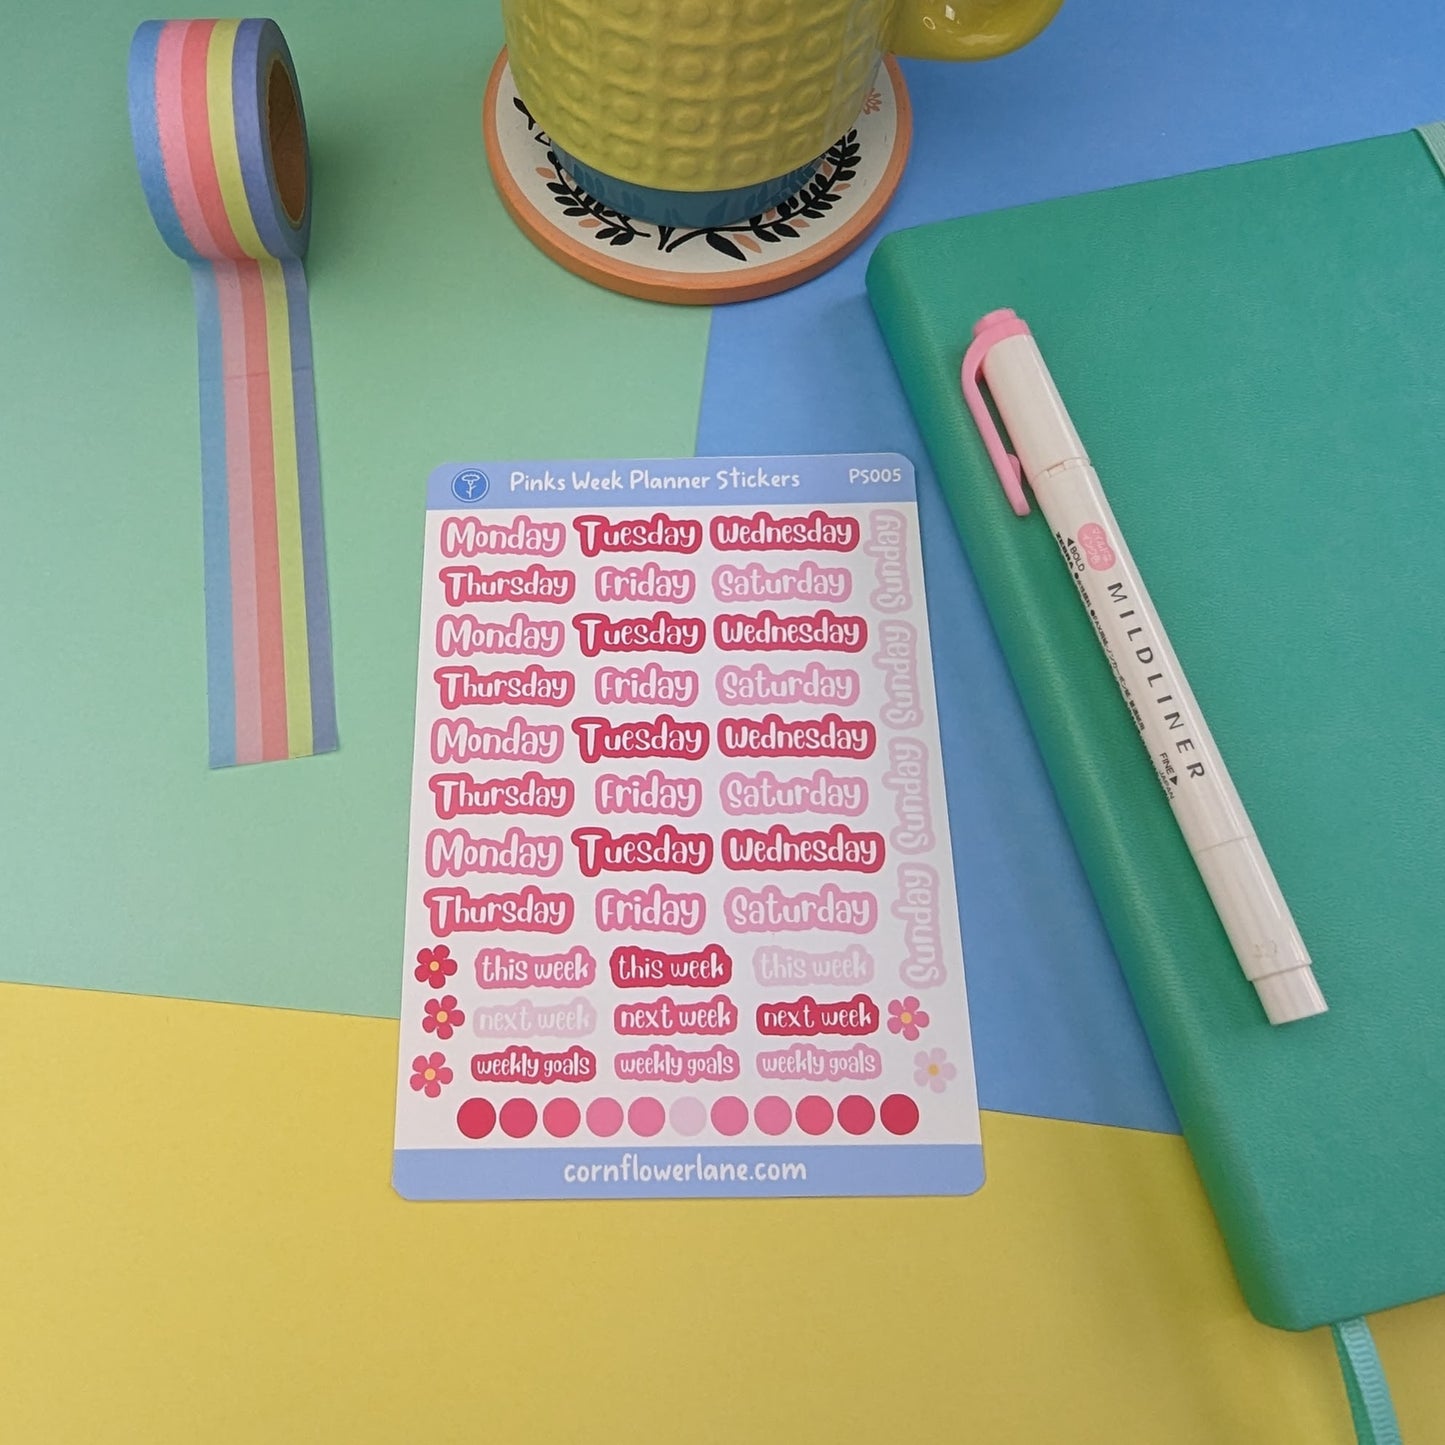 Pinks Week Planner Sticker Sheet